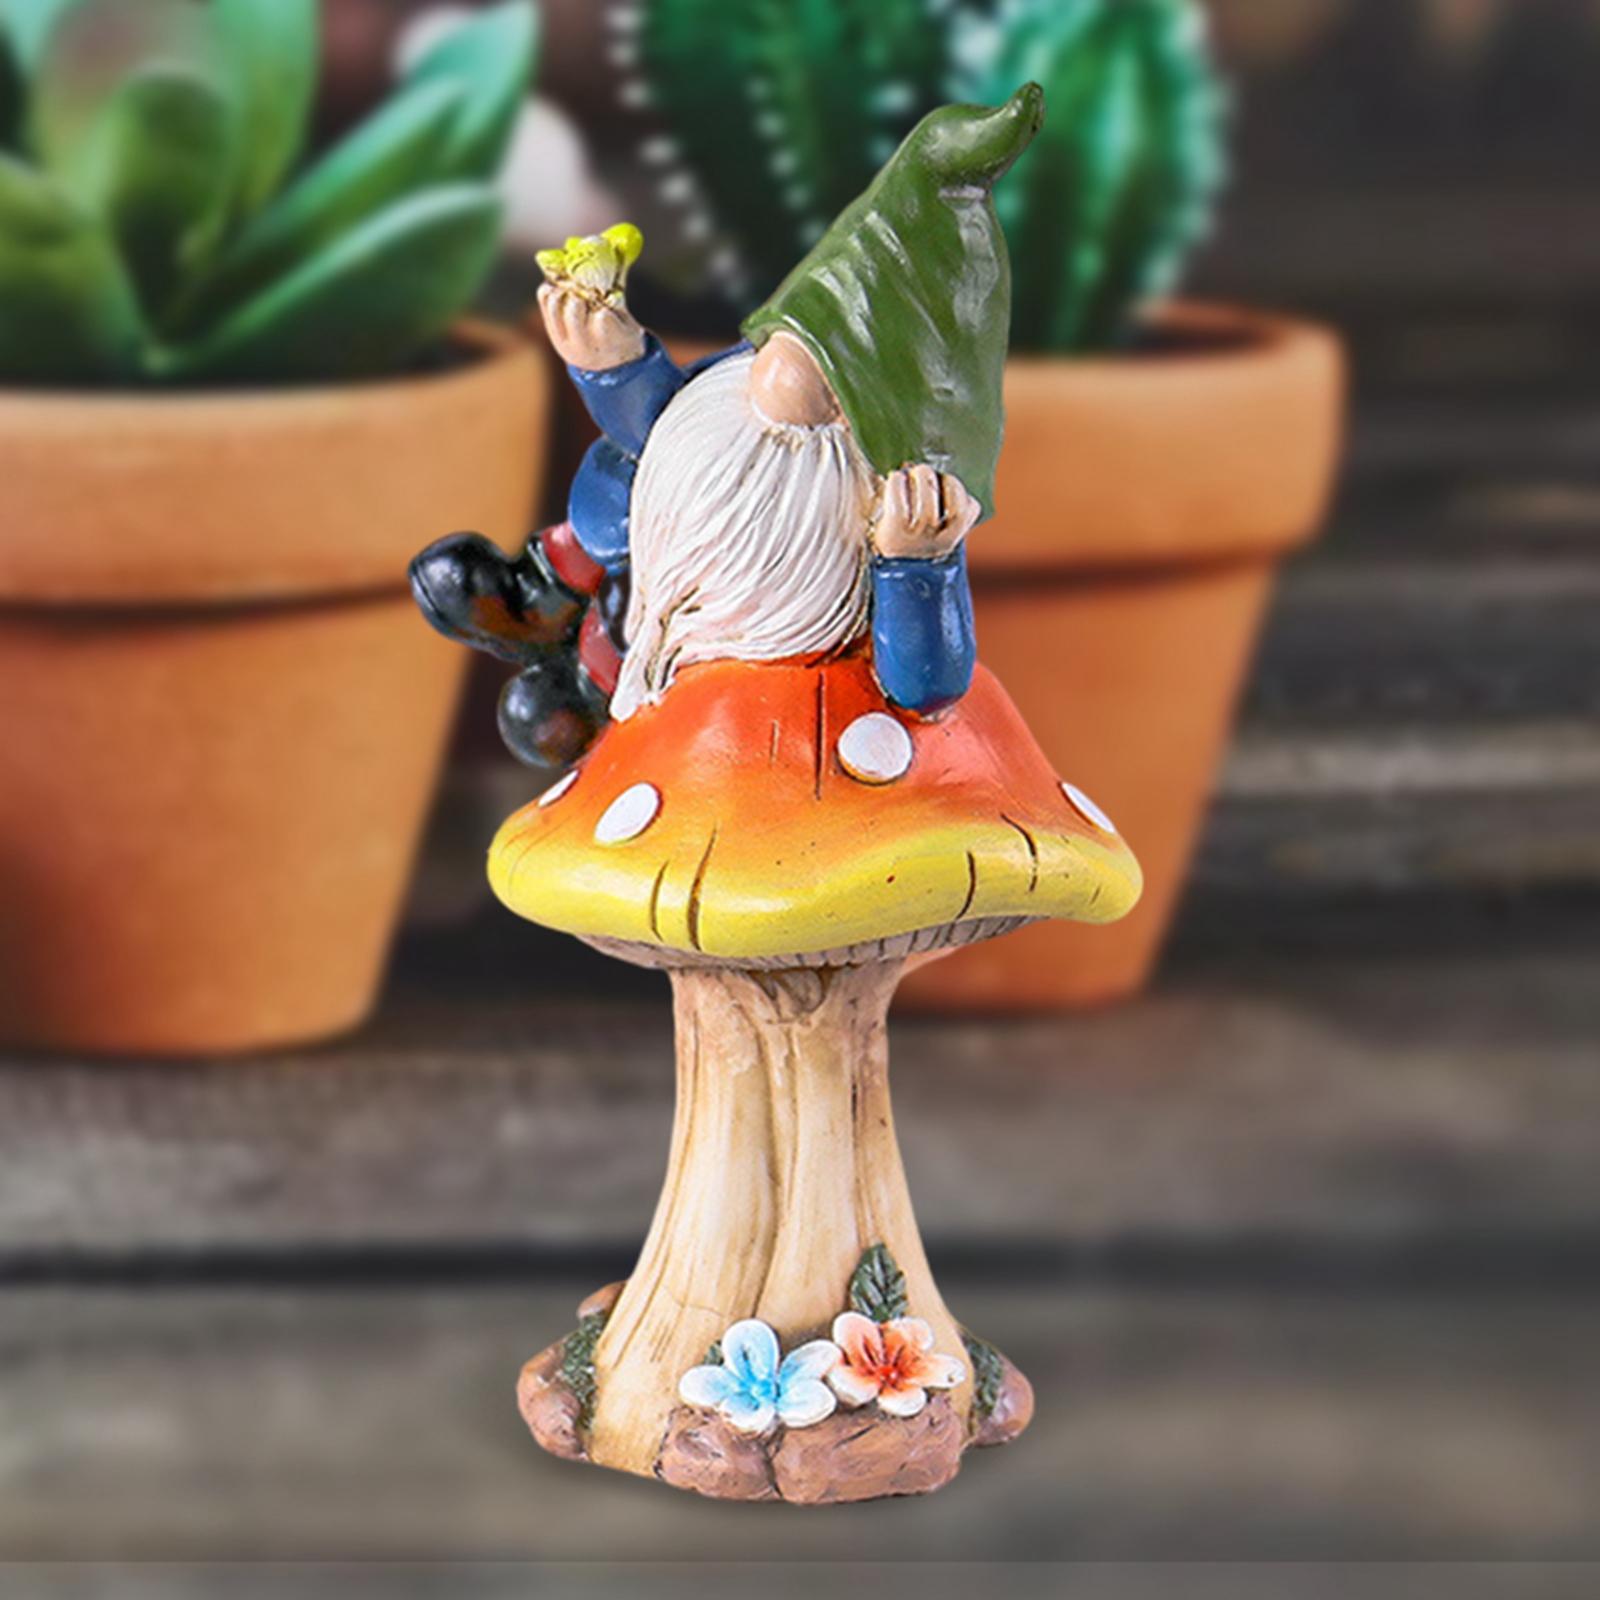 Resin Elves Mushrooms Statue Garden Dwarf Figurine Ornaments  10x7.8x17cm